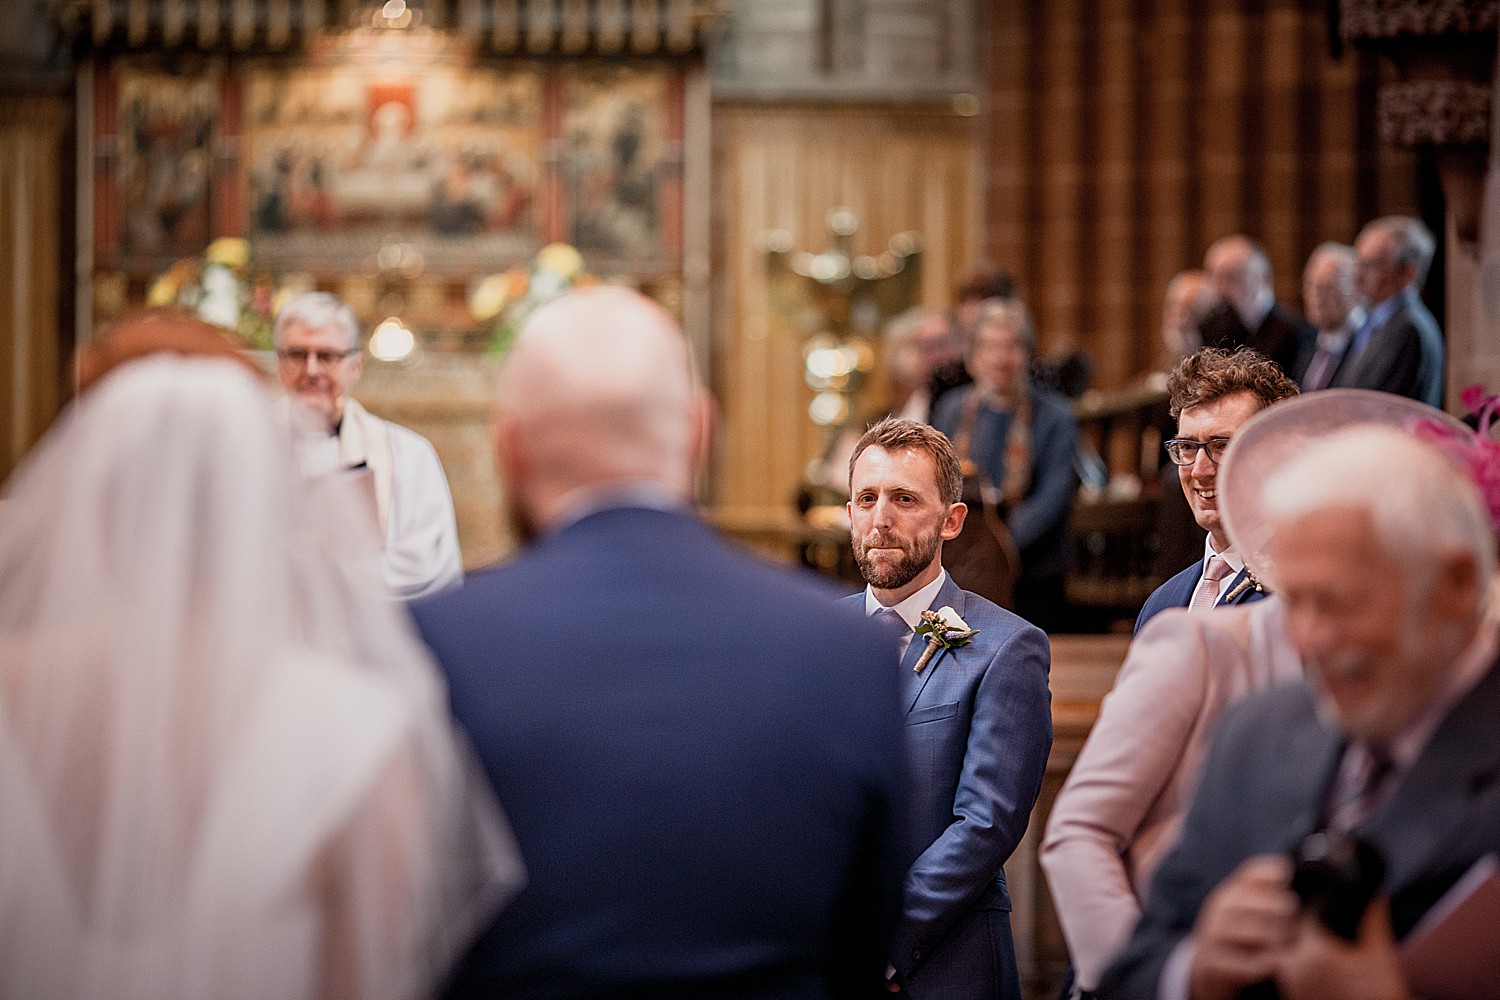 Grooms emotions as his bride walks down the aisle